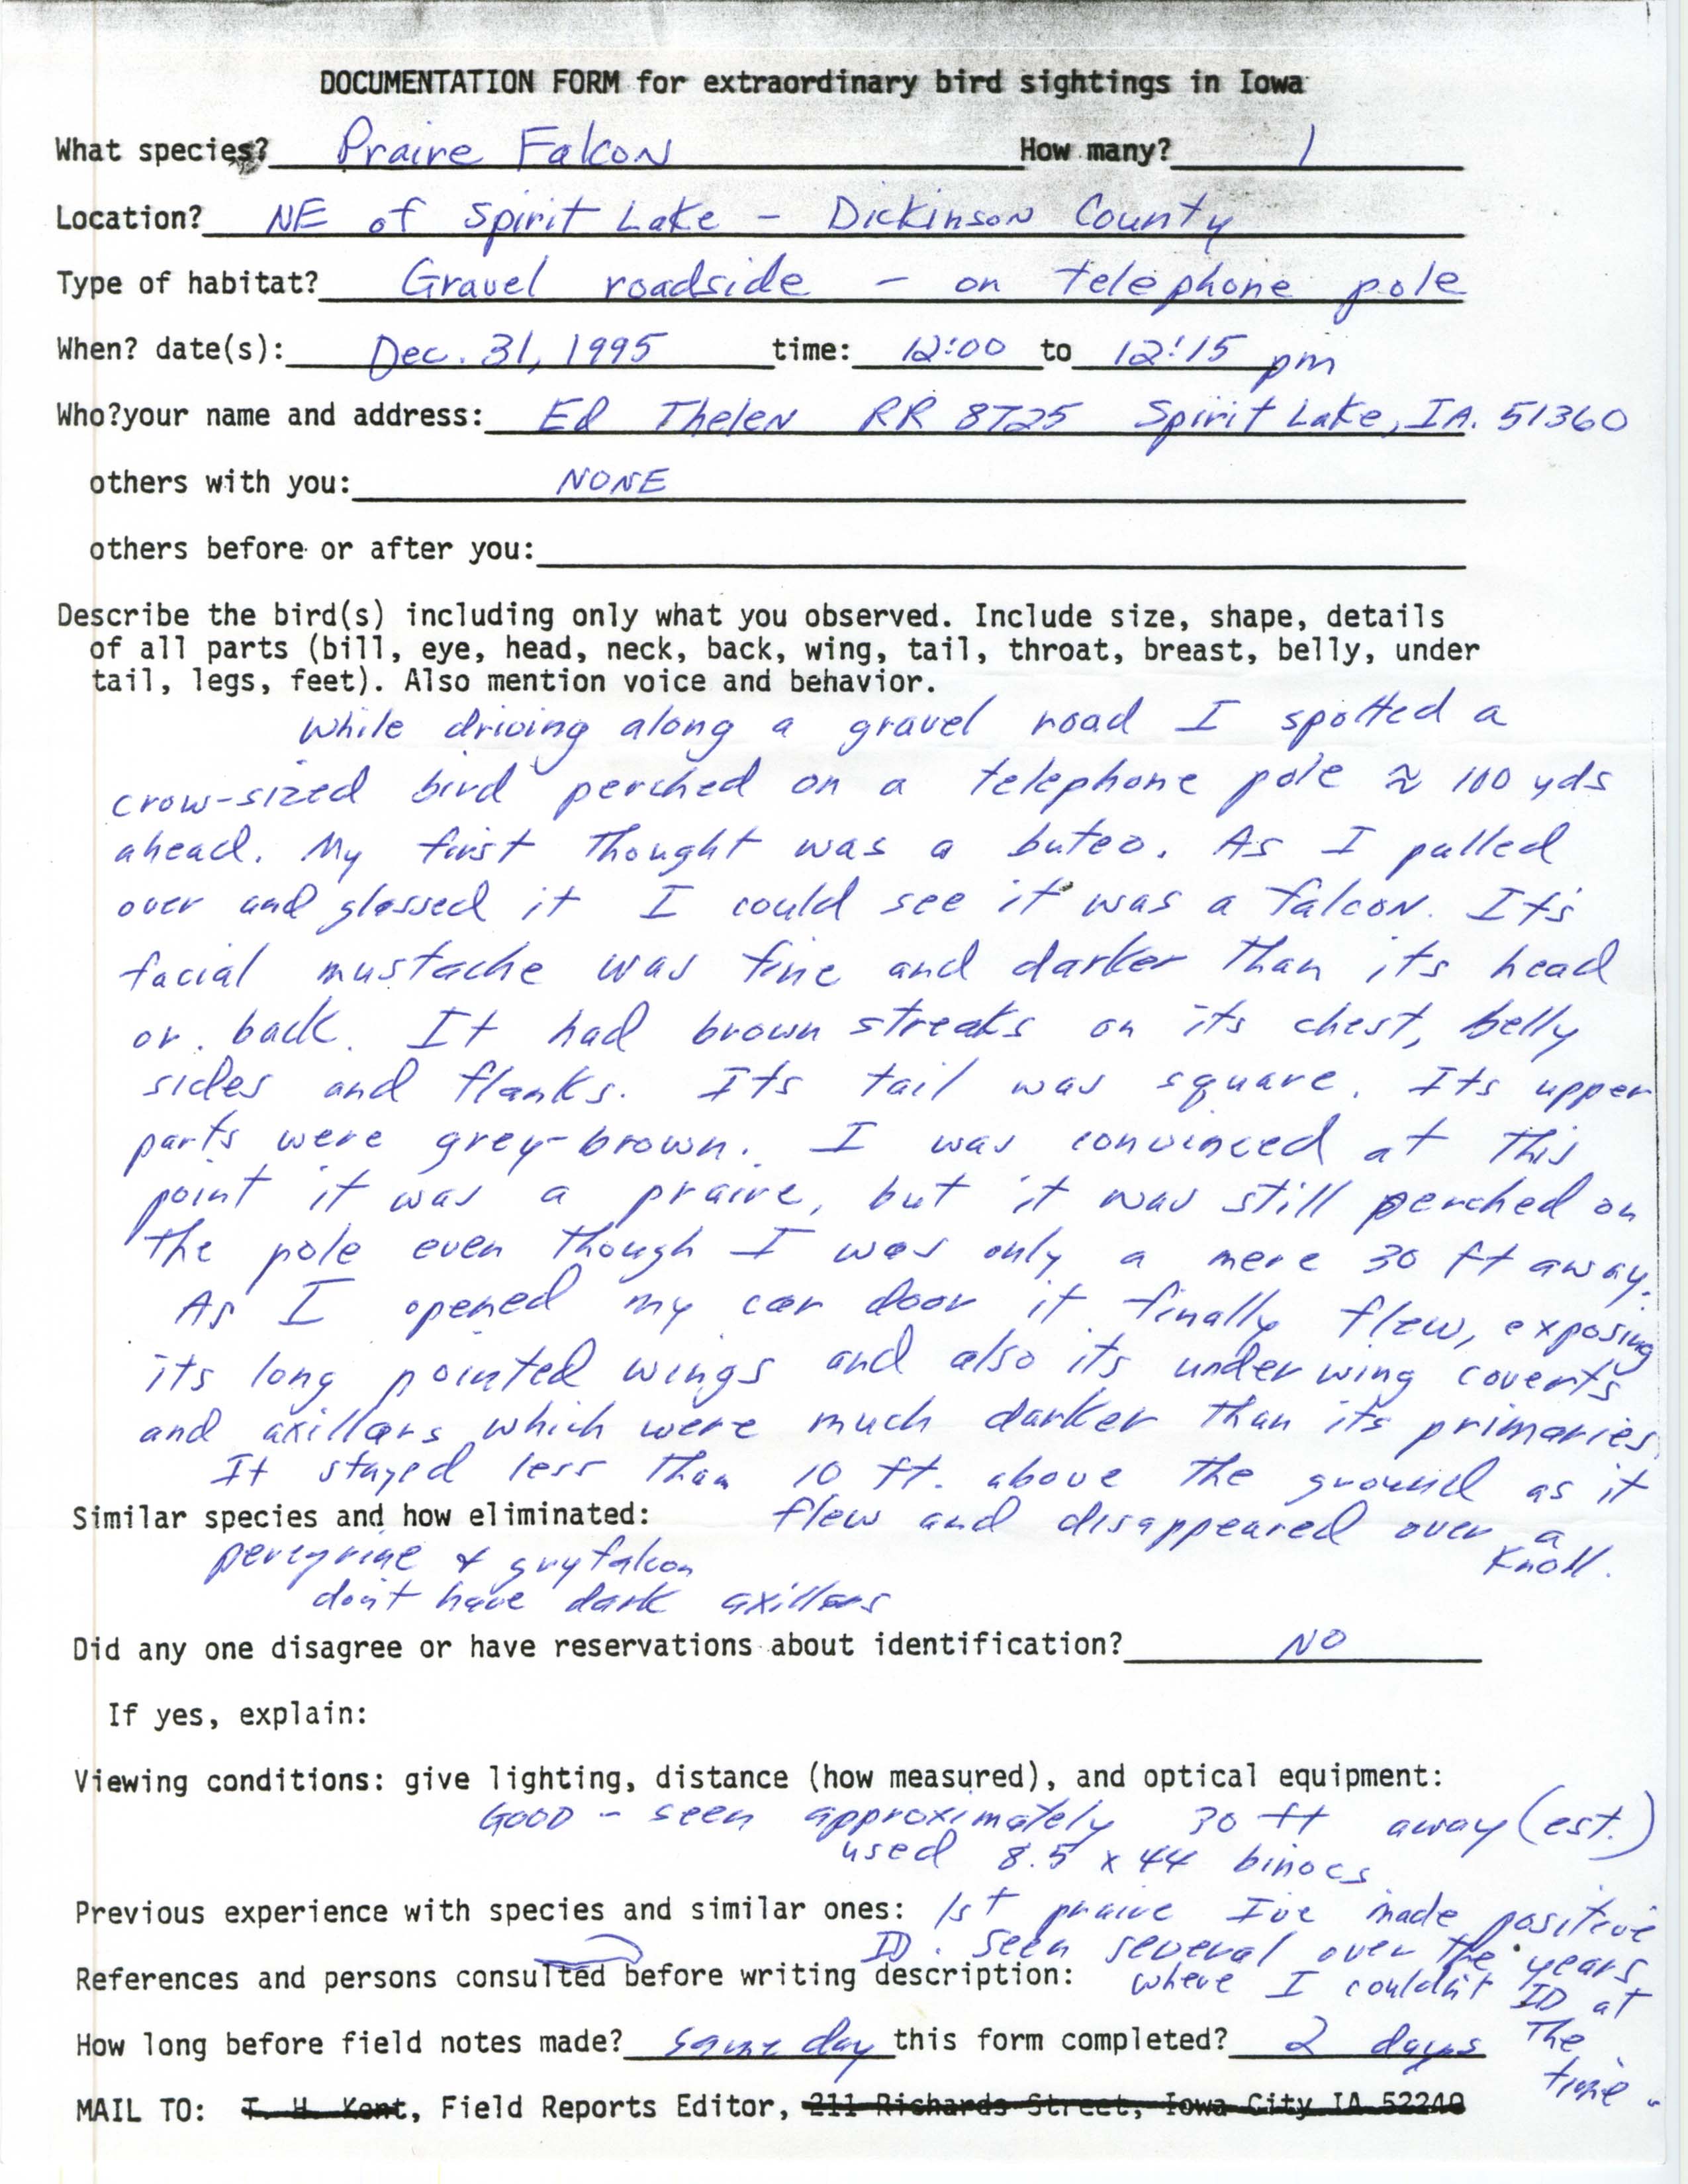 Rare bird documentation form for Prairie Falcon northeast of Spirit Lake, 1995